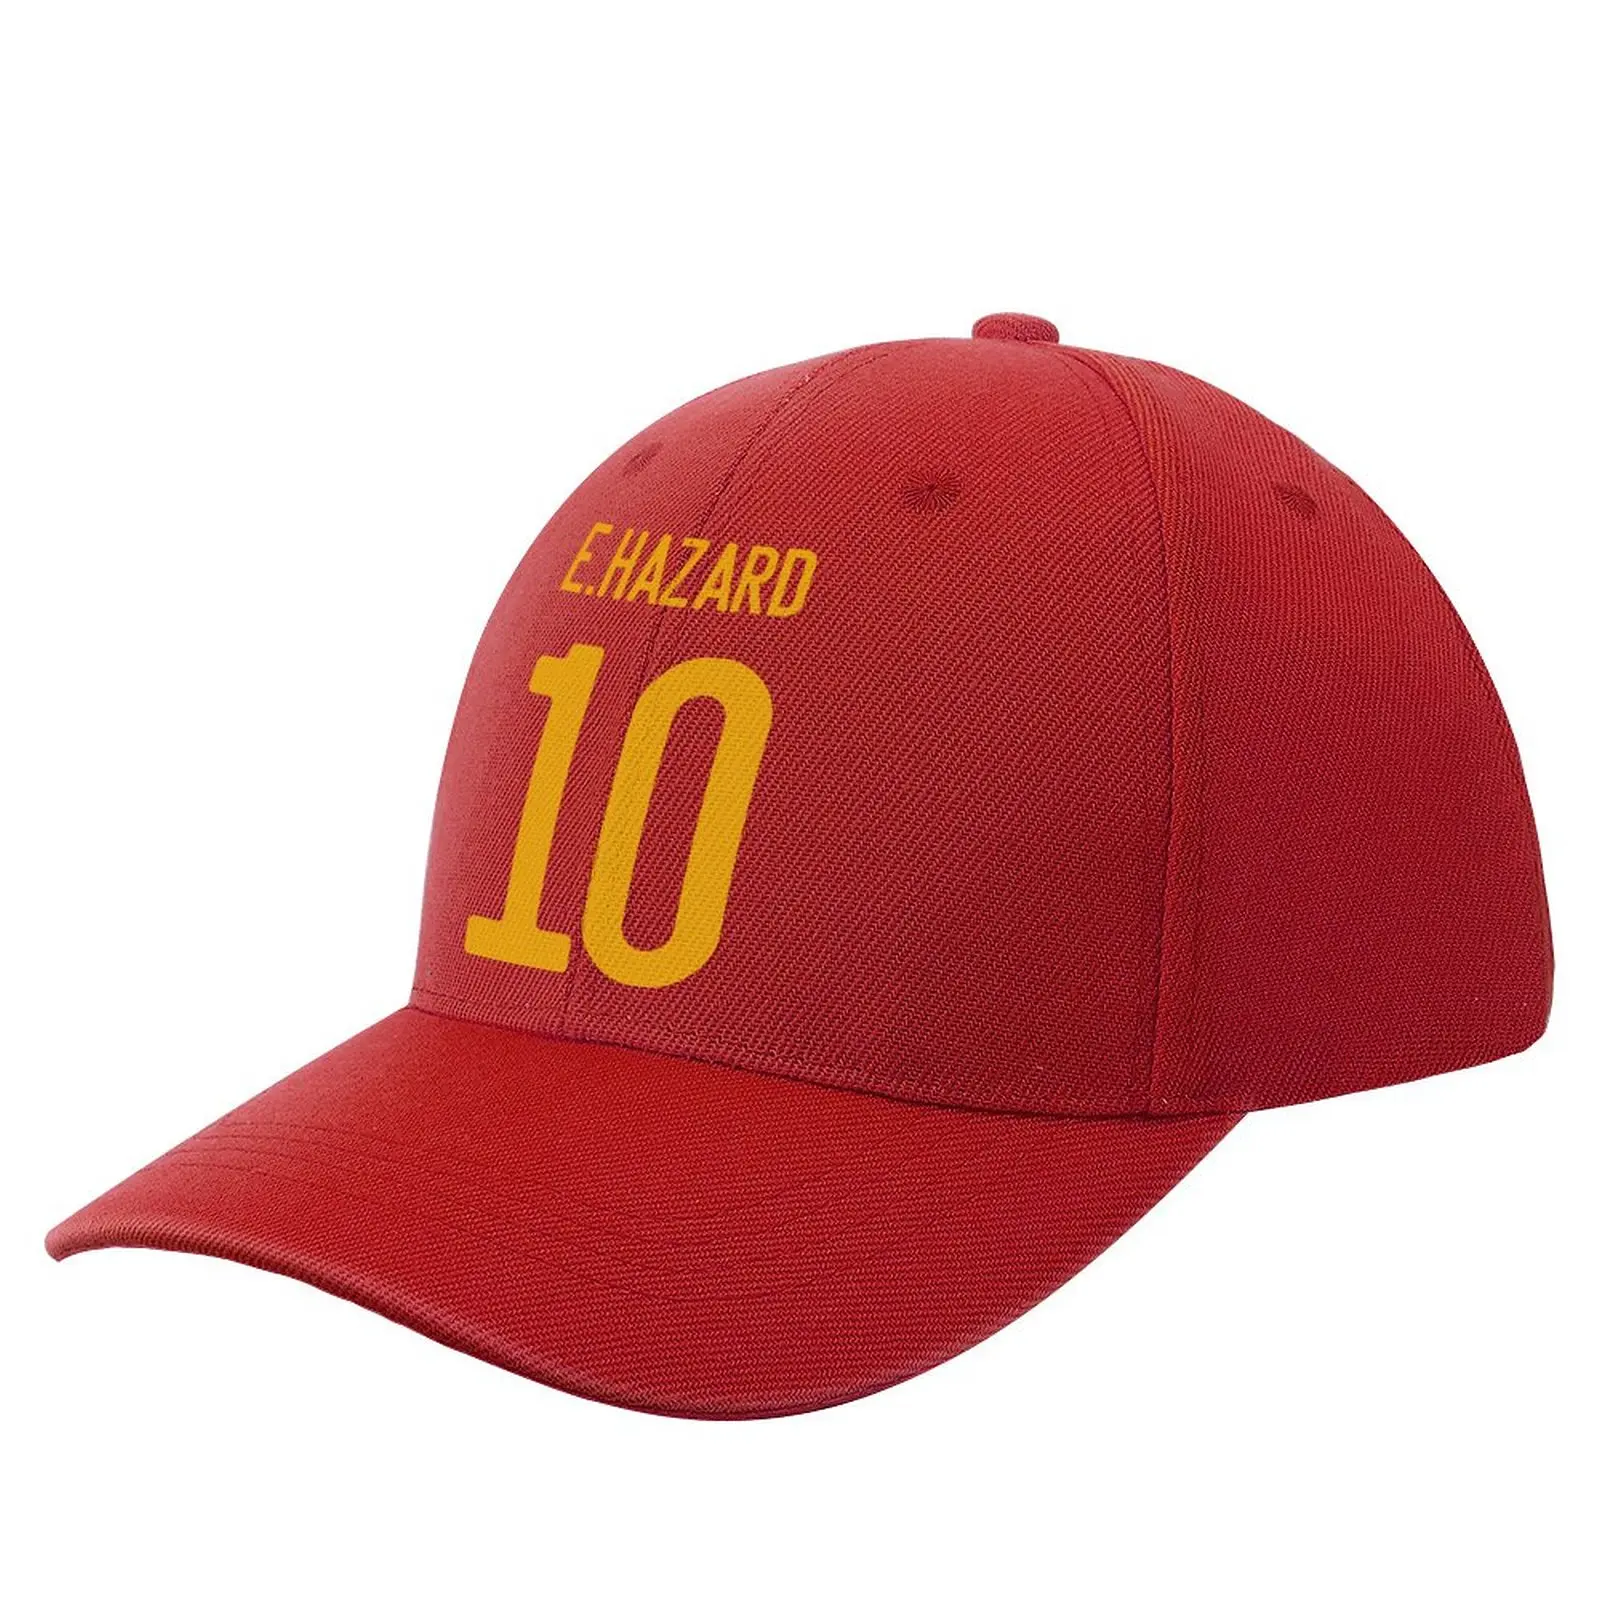 

Men Women Hat 10 Eden Hazard Baseball Cap Wild Sun Shade Peaked Hats Adjustable Caps for Fans 100% Polyester